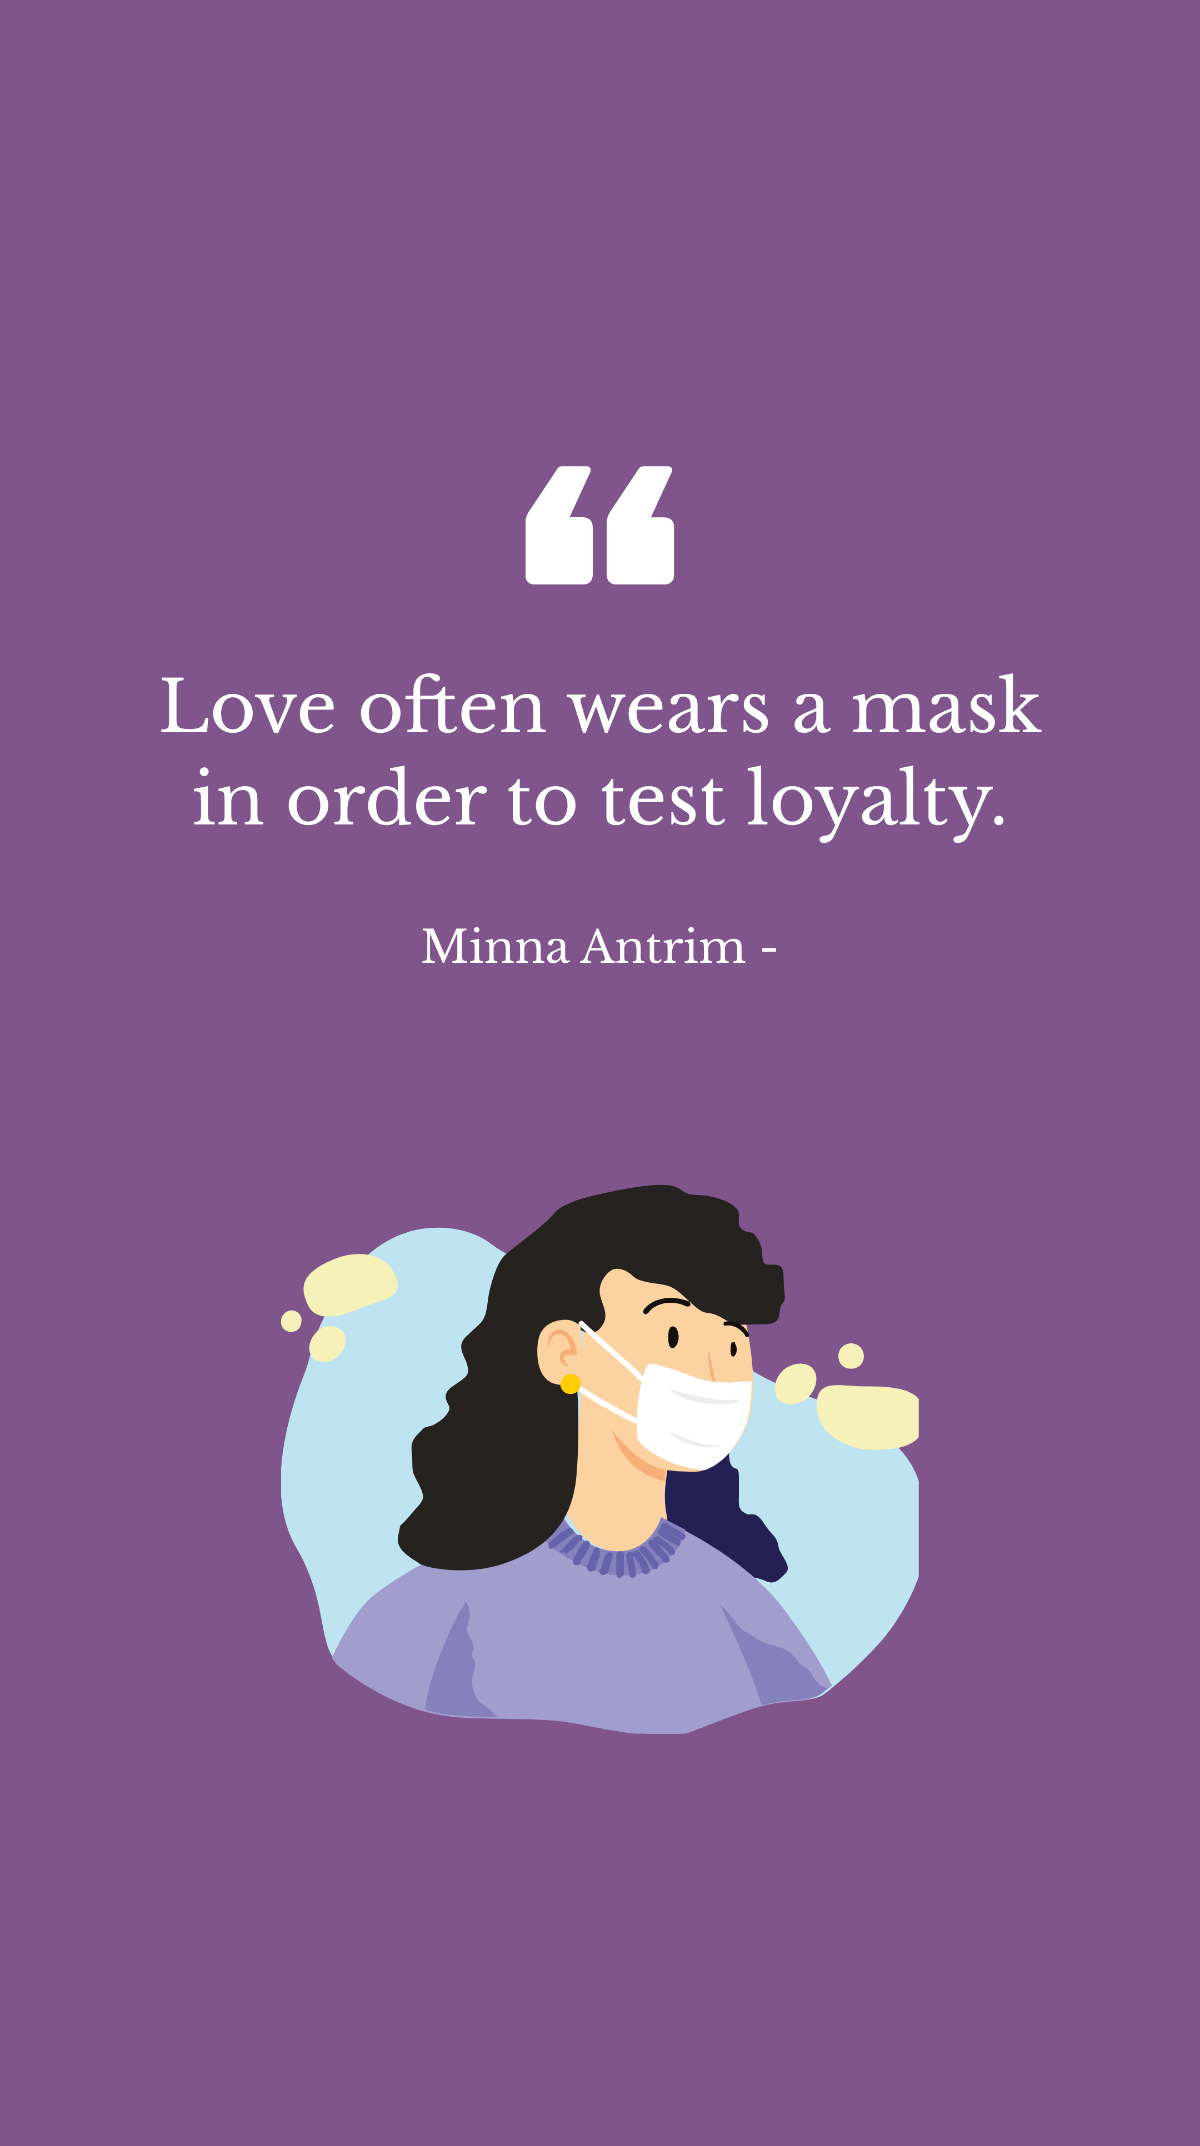 Minna Antrim - Love often wears a mask in order to test loyalty.